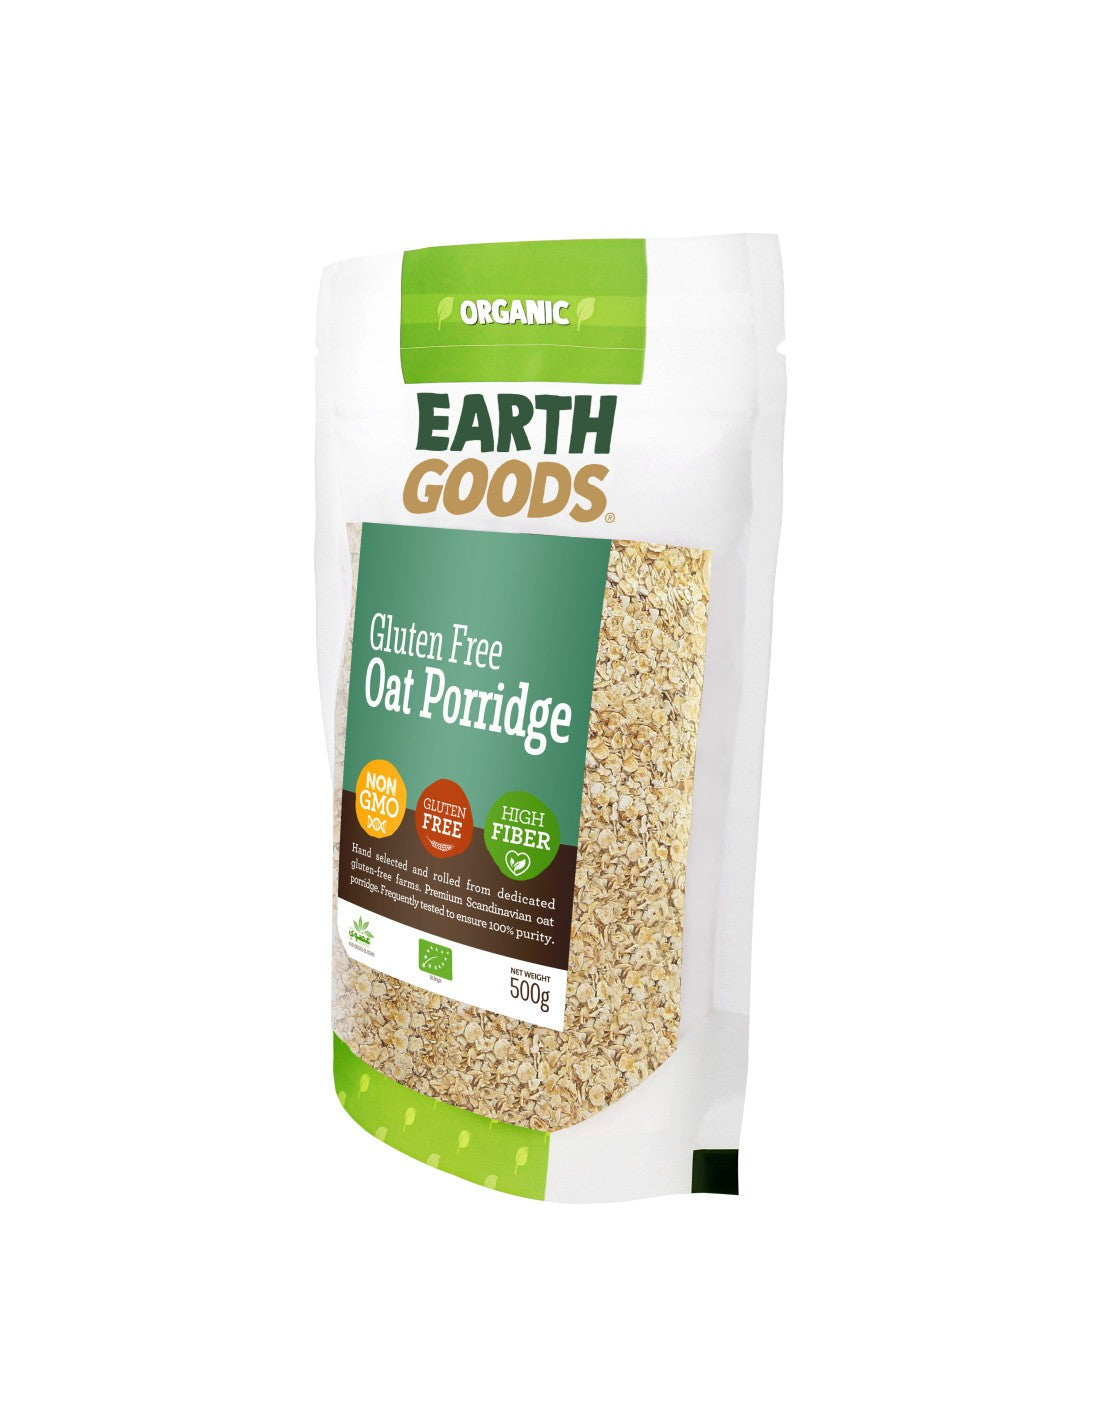 EARTH GOODS Organic Gluten Free Oat Porridge, 500g - Organic, Vegan, Gluten Free, Non GMO